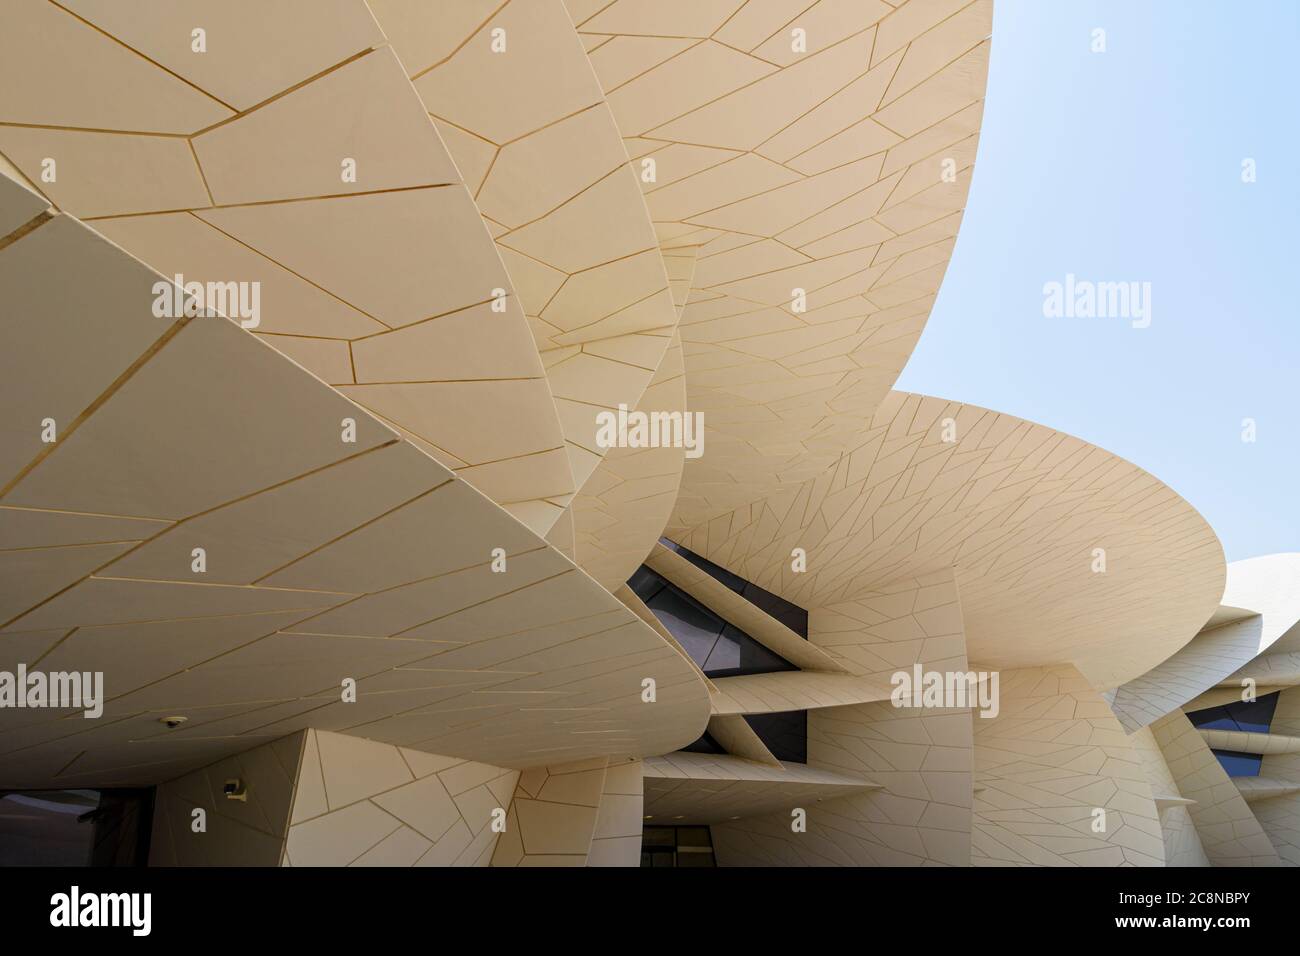 Detail of the interlocking discs of the desert rose inspired architectural landmark of the National Museum of Qatar, Doha, Qatar Stock Photo